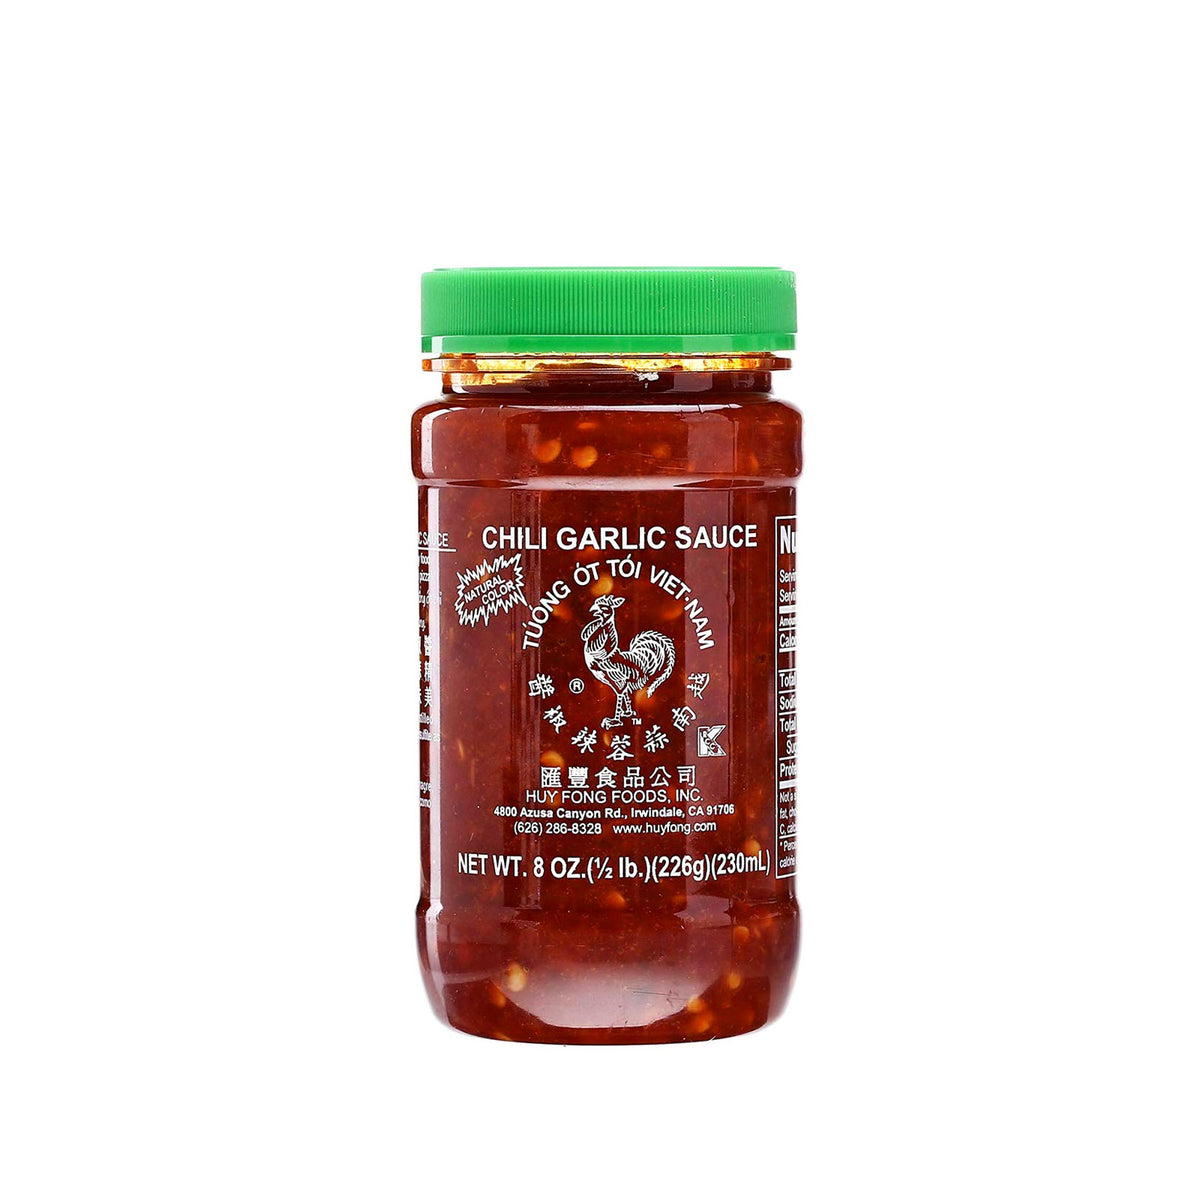 huy fong foods garlic chili sauce - 8oz